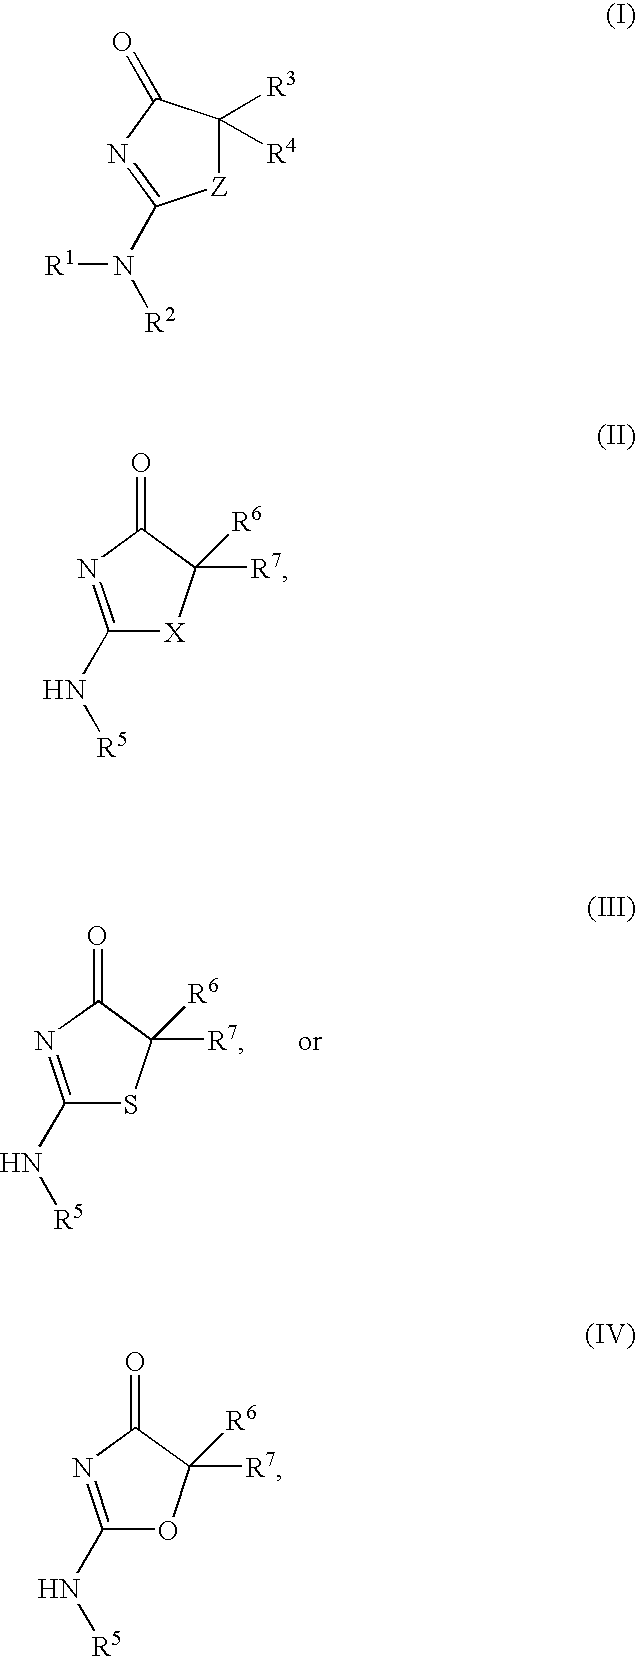 Inhibitors of 11-β-hydroxy steroid dehydrogenase type 1